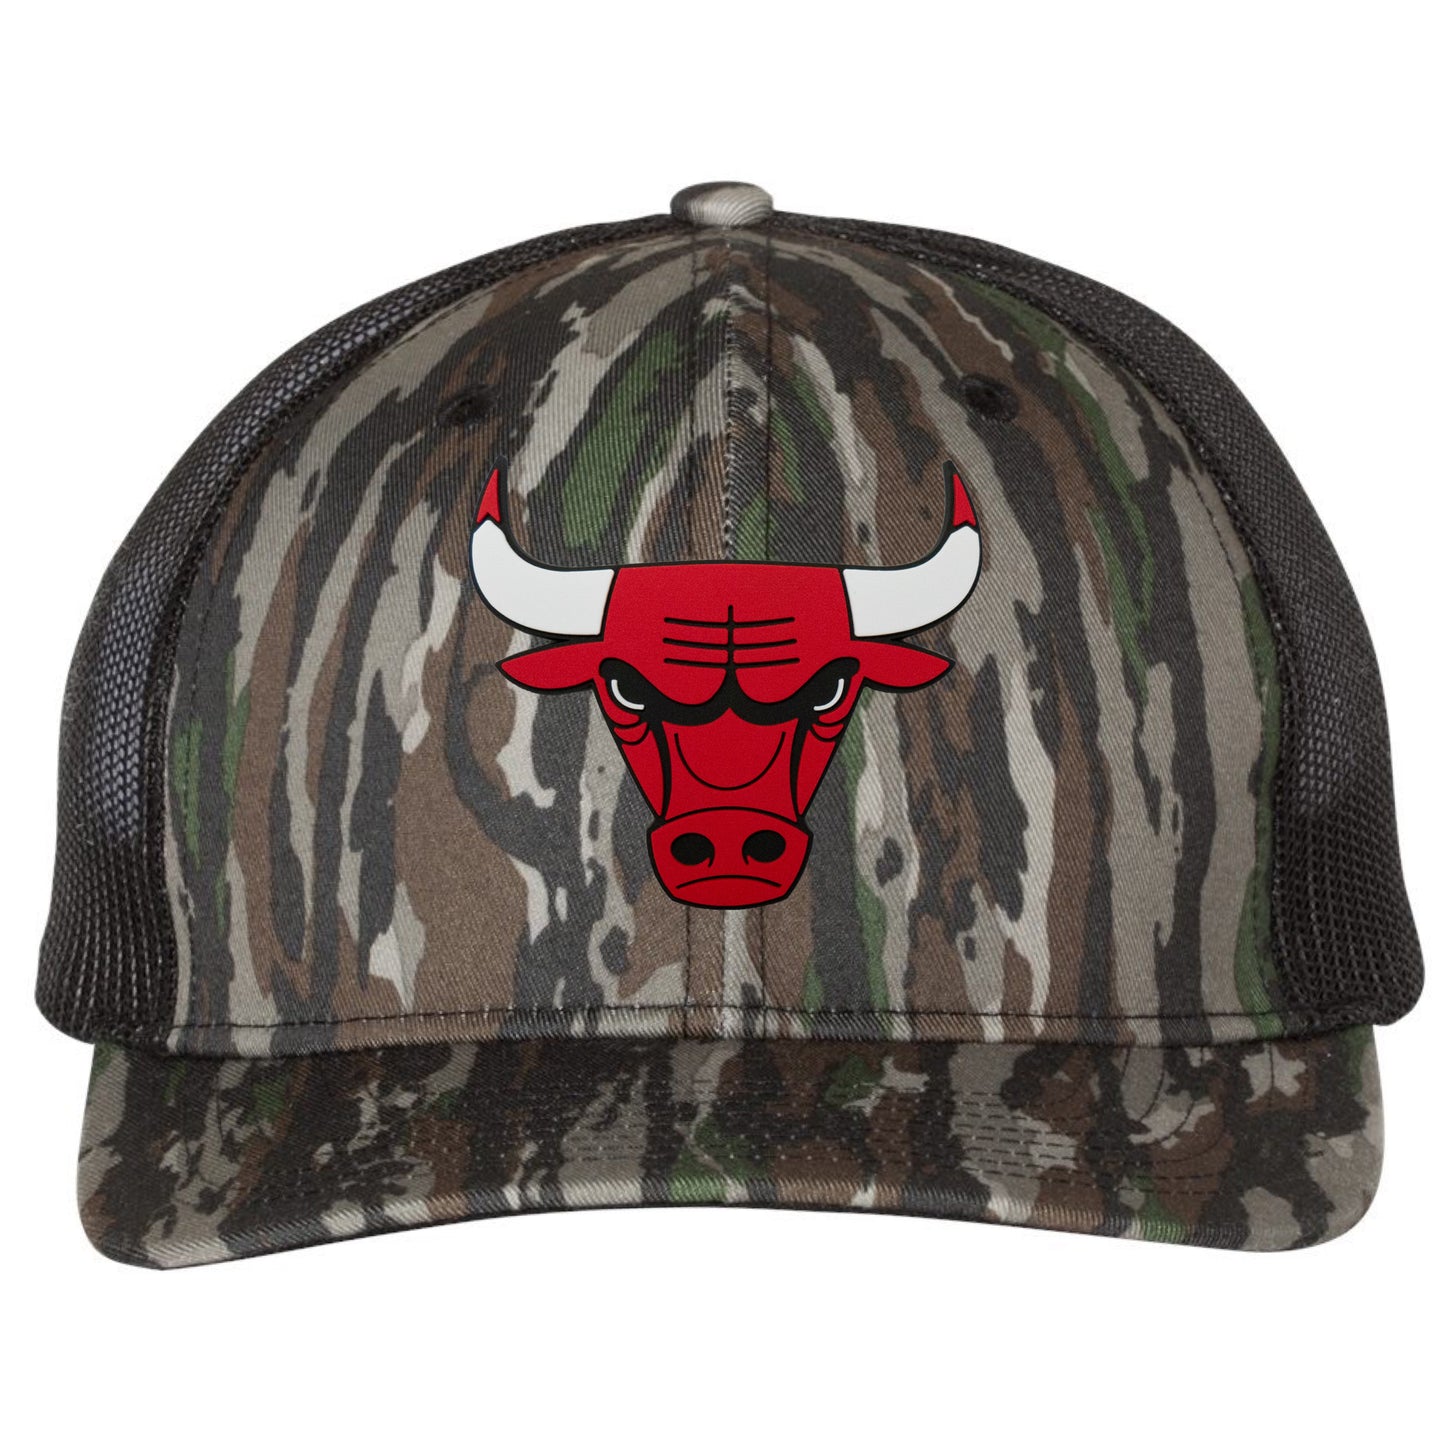 Chicago Bulls 3D Patterned Snapback Trucker Hat- Realtree Original/ Black - Ten Gallon Hat Co.